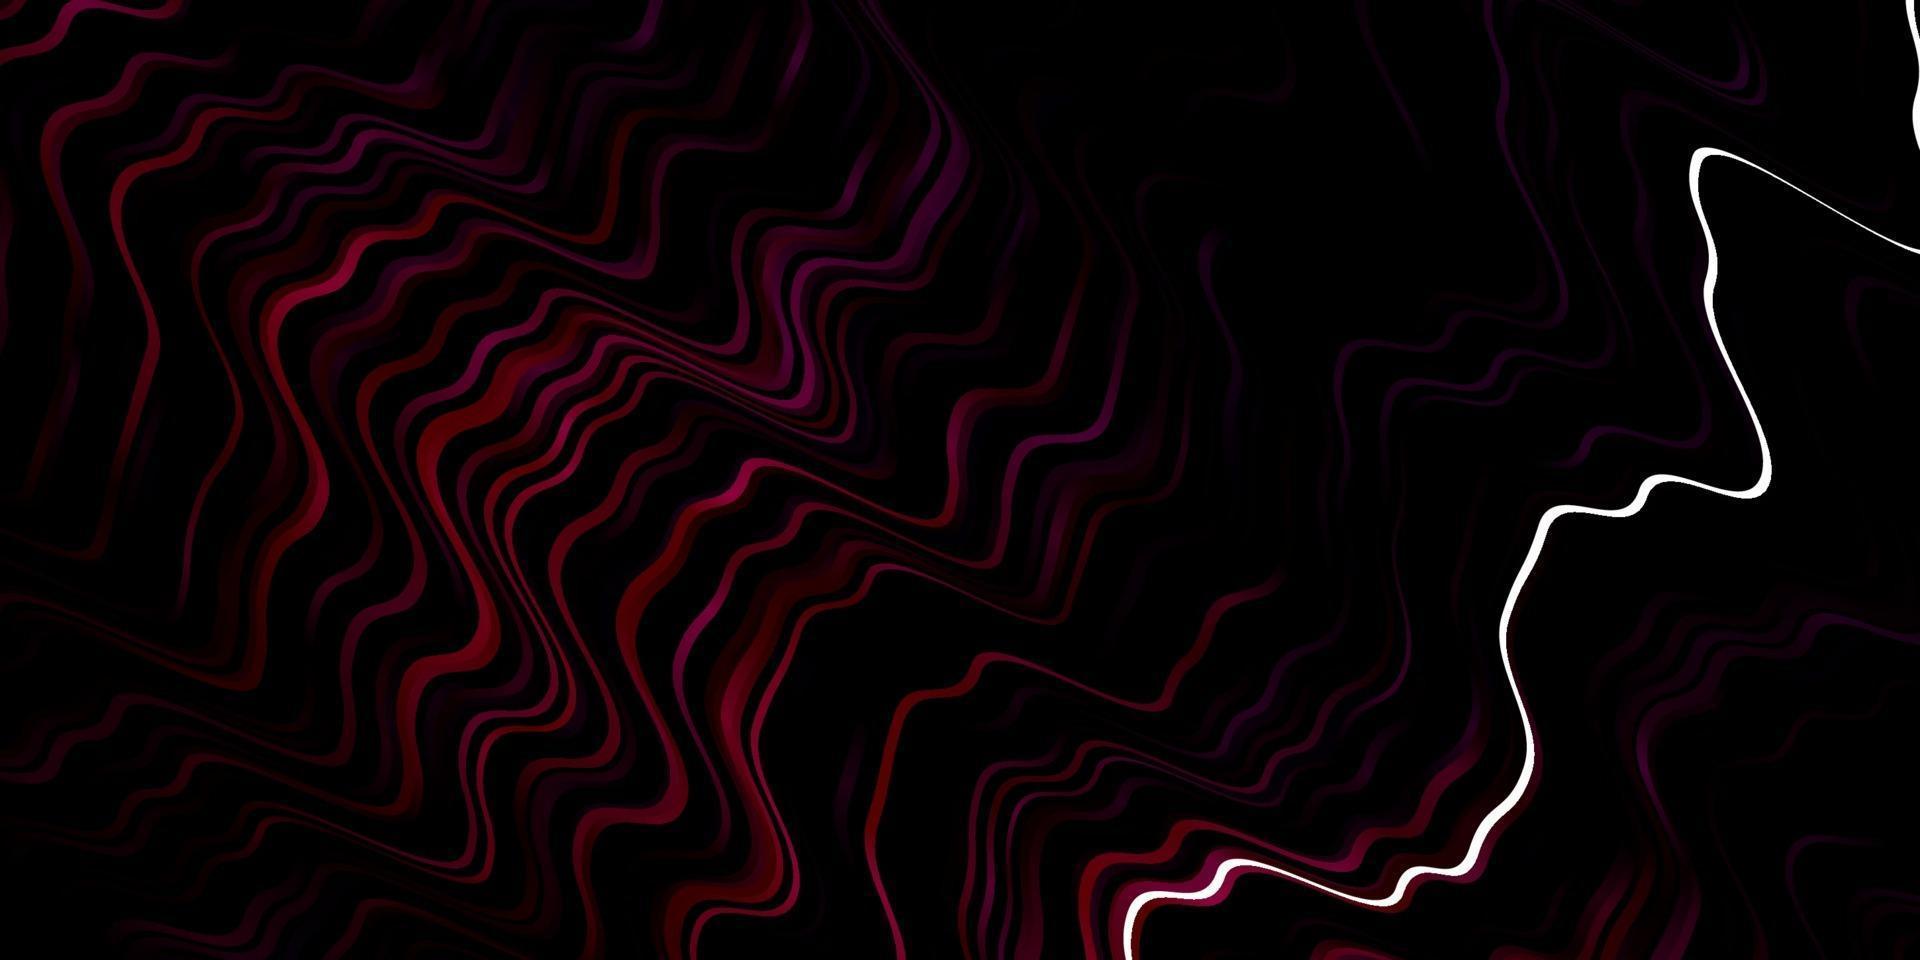 patrón de vector rosa oscuro con líneas curvas.